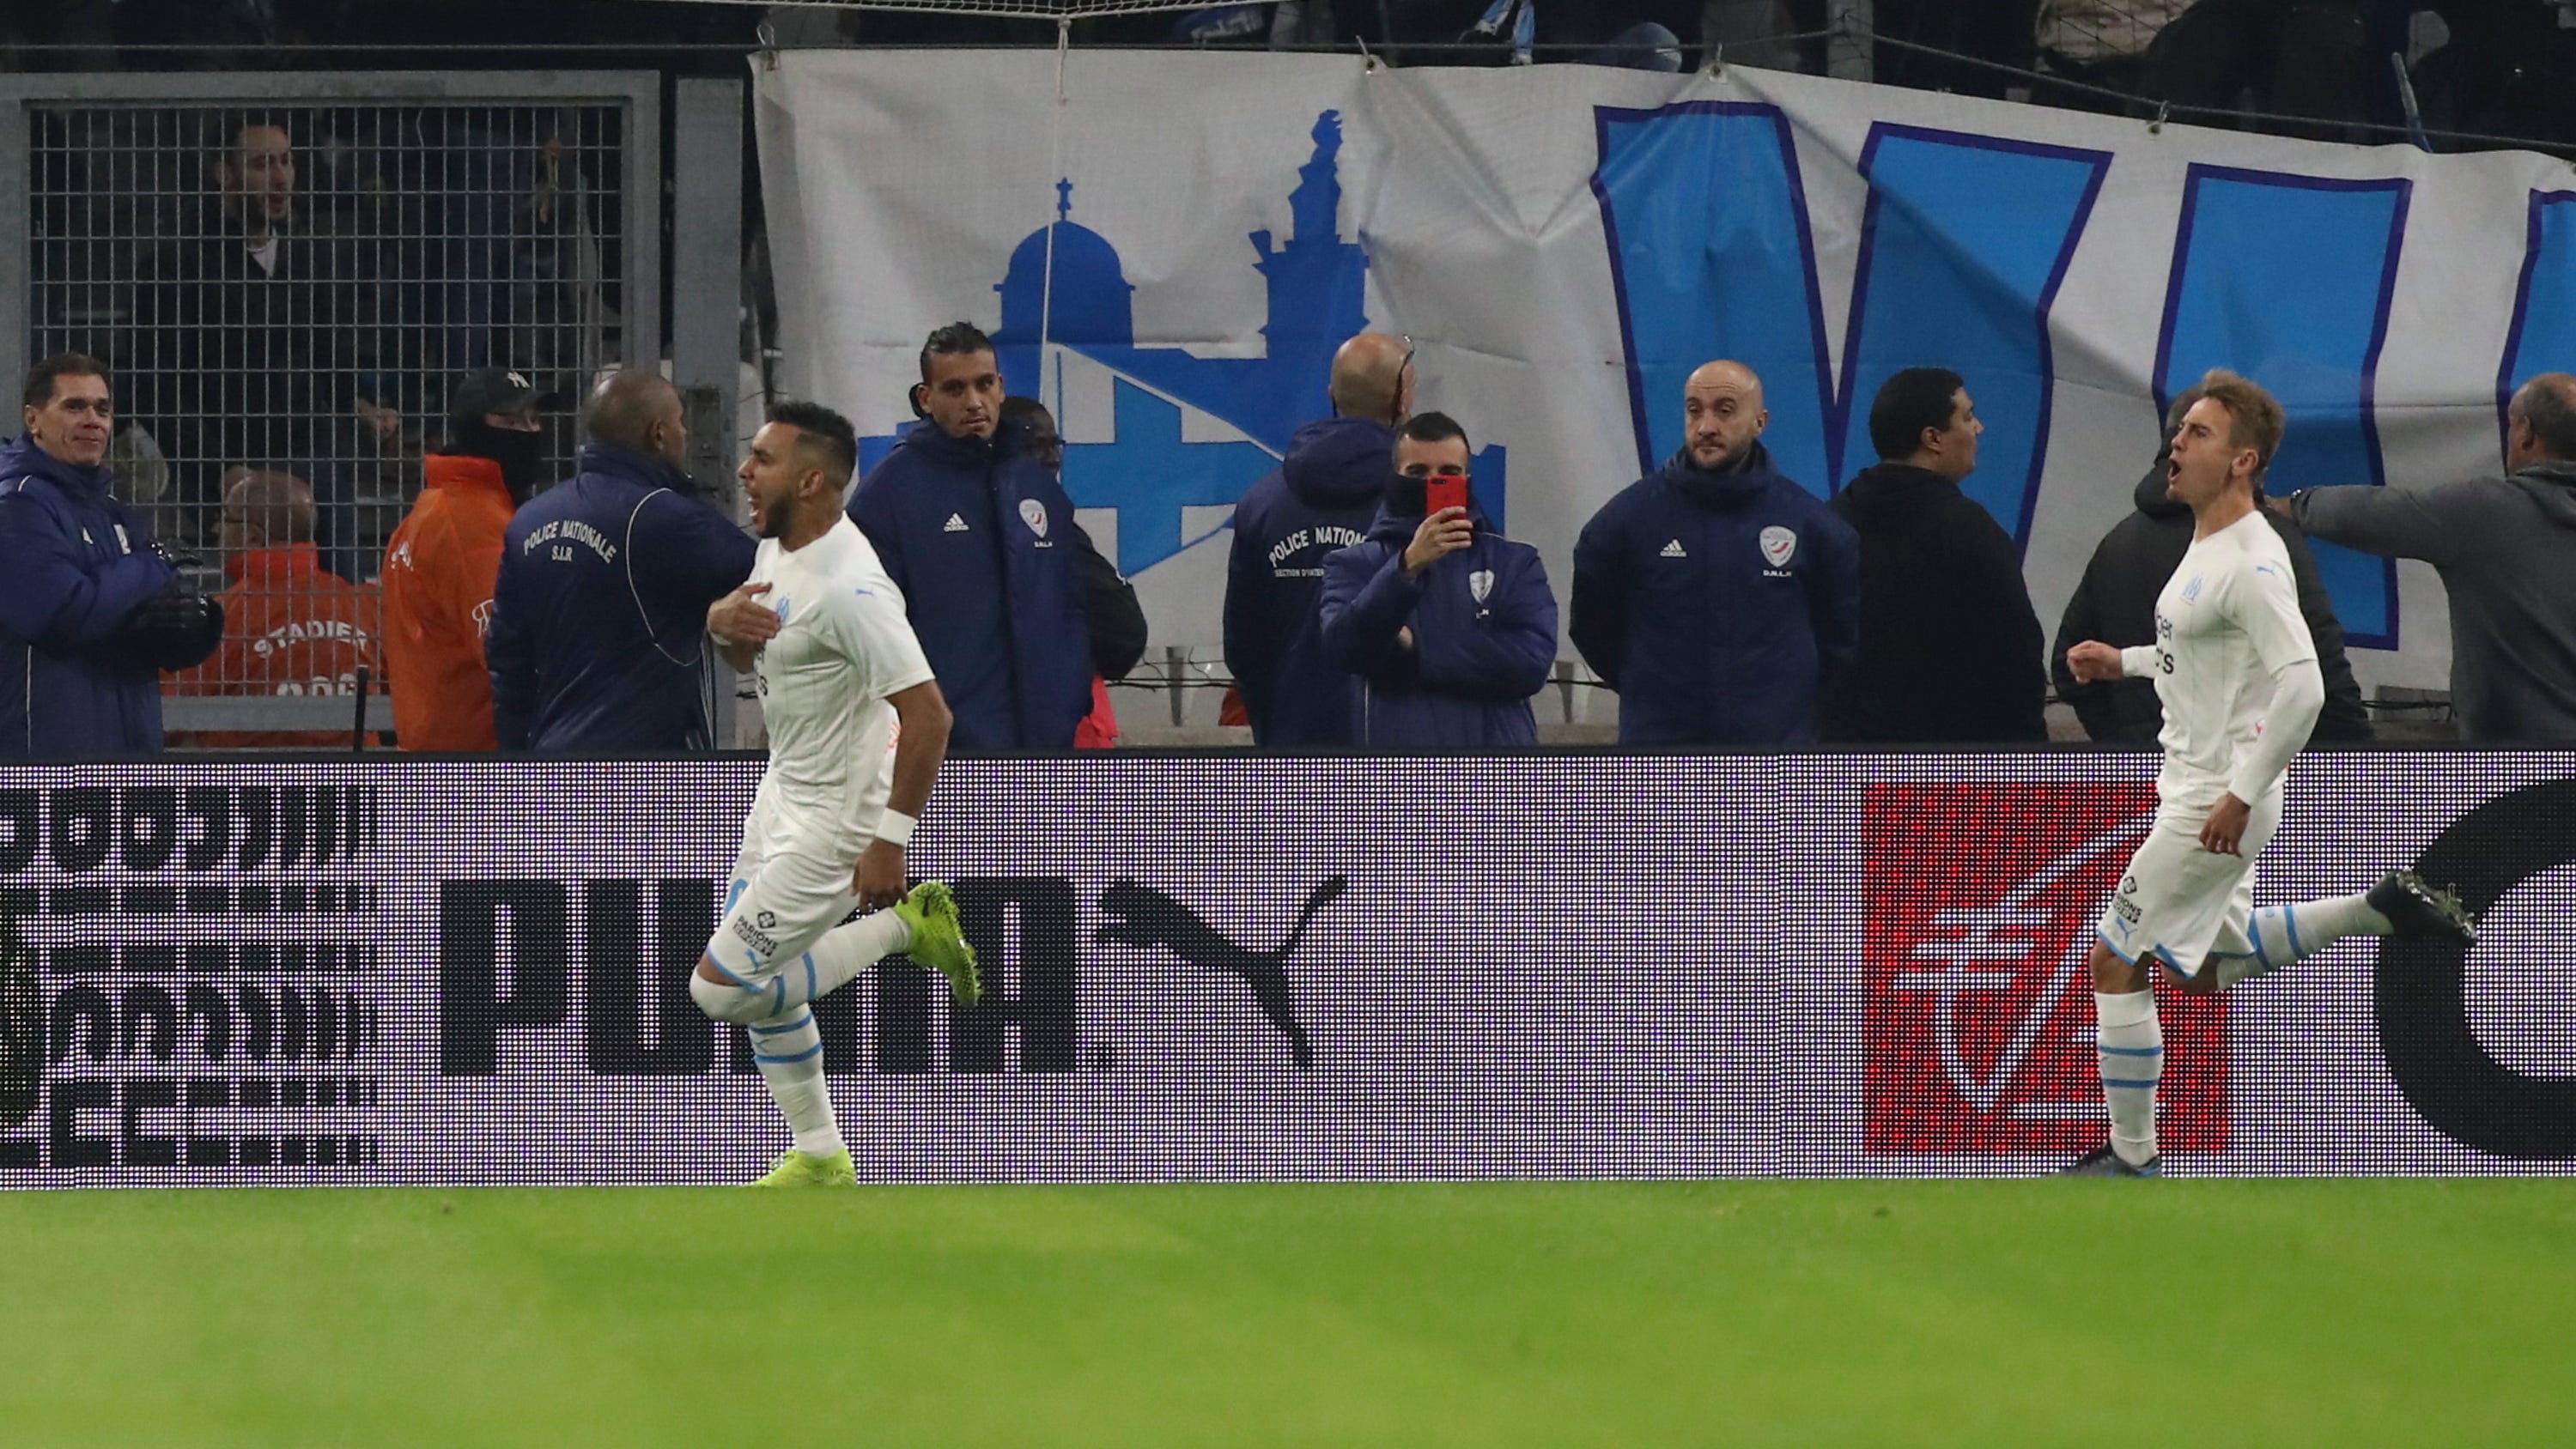 Super sub Radonjic scores as Marseille draws 1-1 at Metz